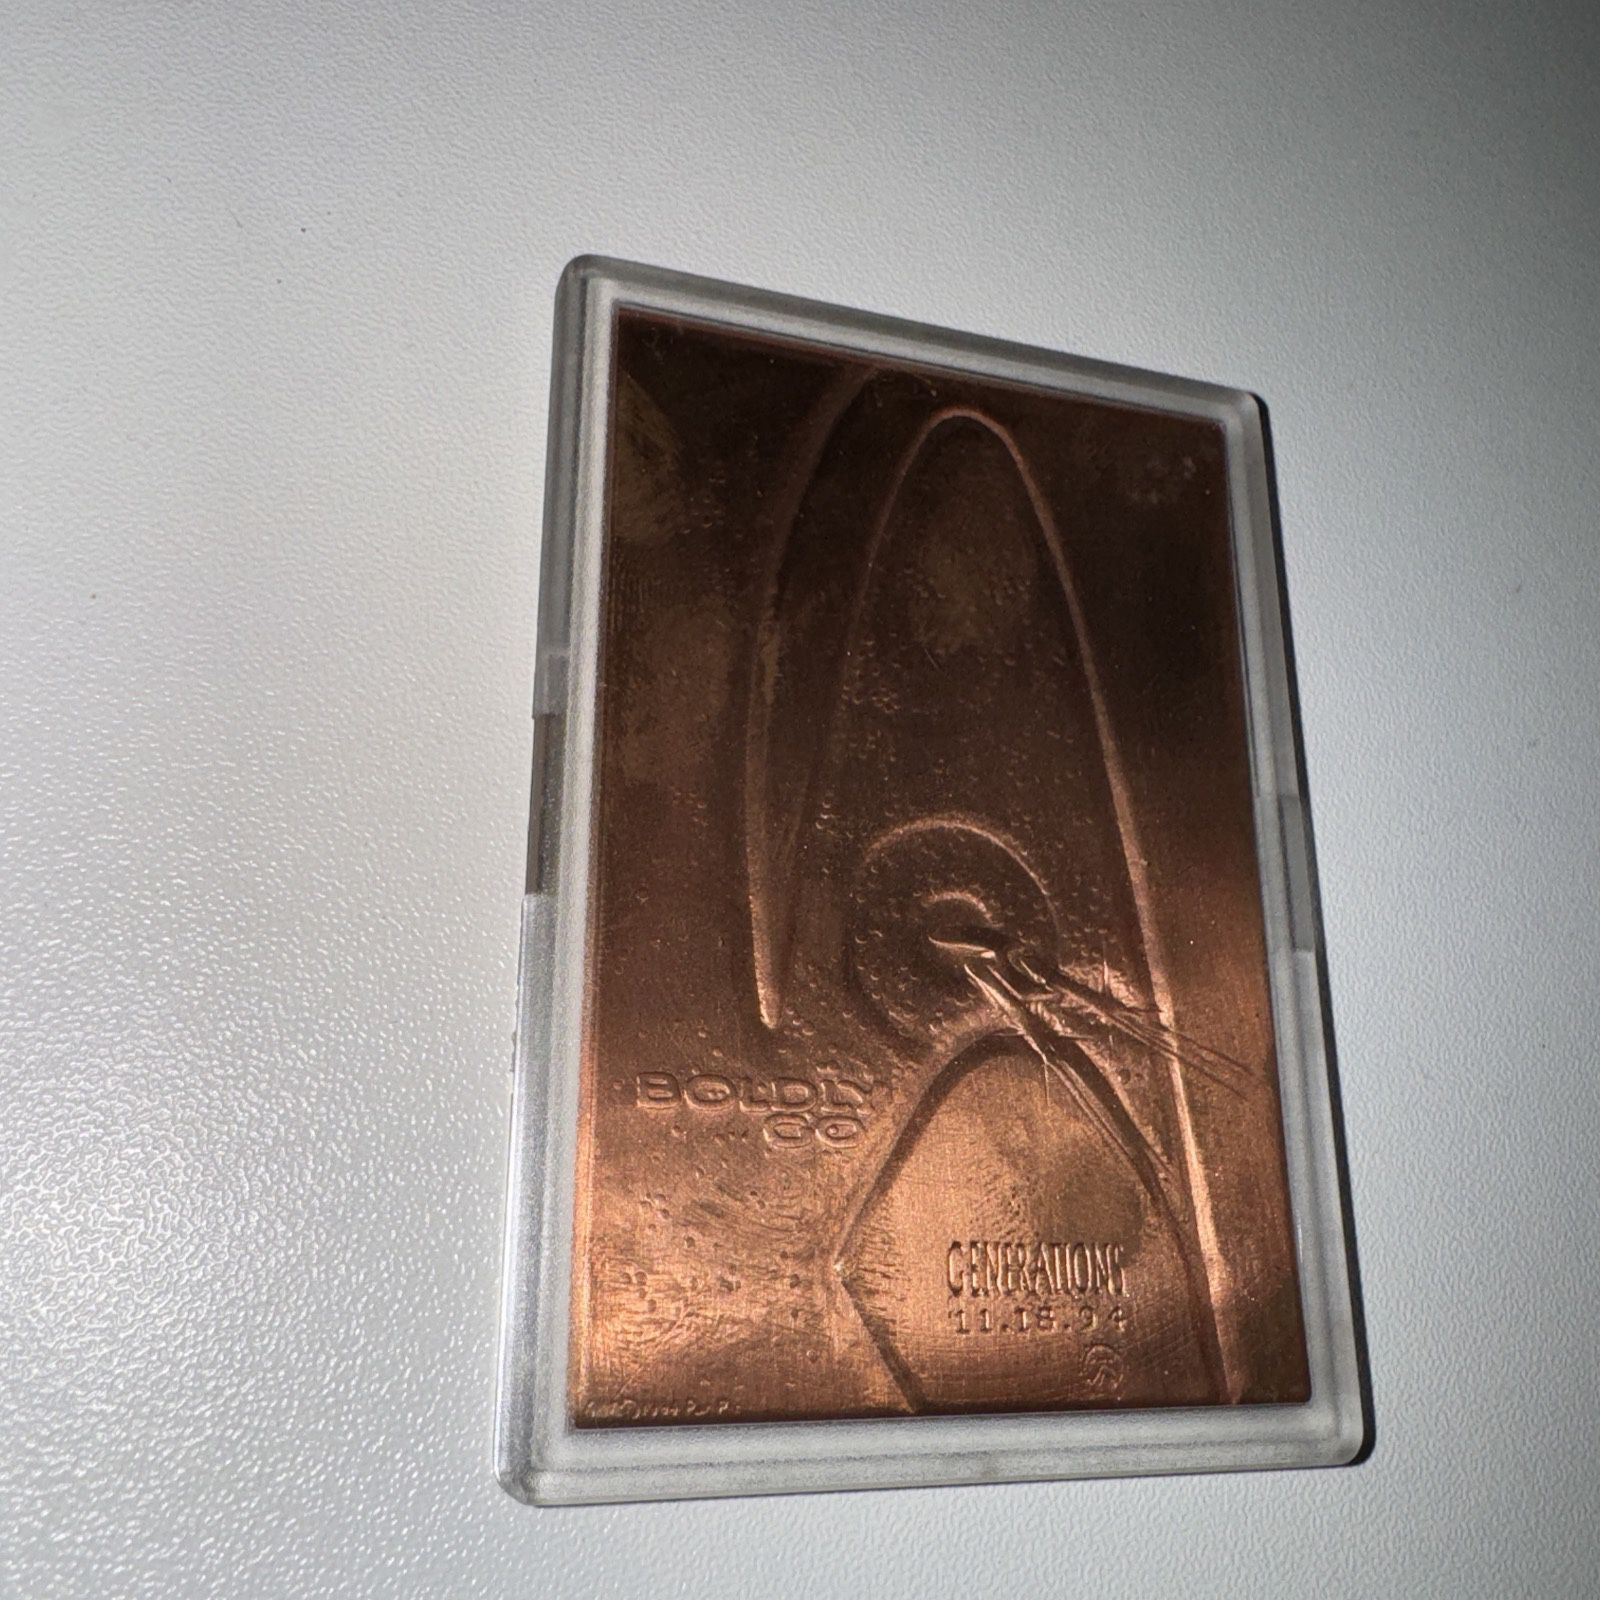 1994 Star Trek Generations 'Boldly Go' Copper Trading Card Vintage Memorabilia